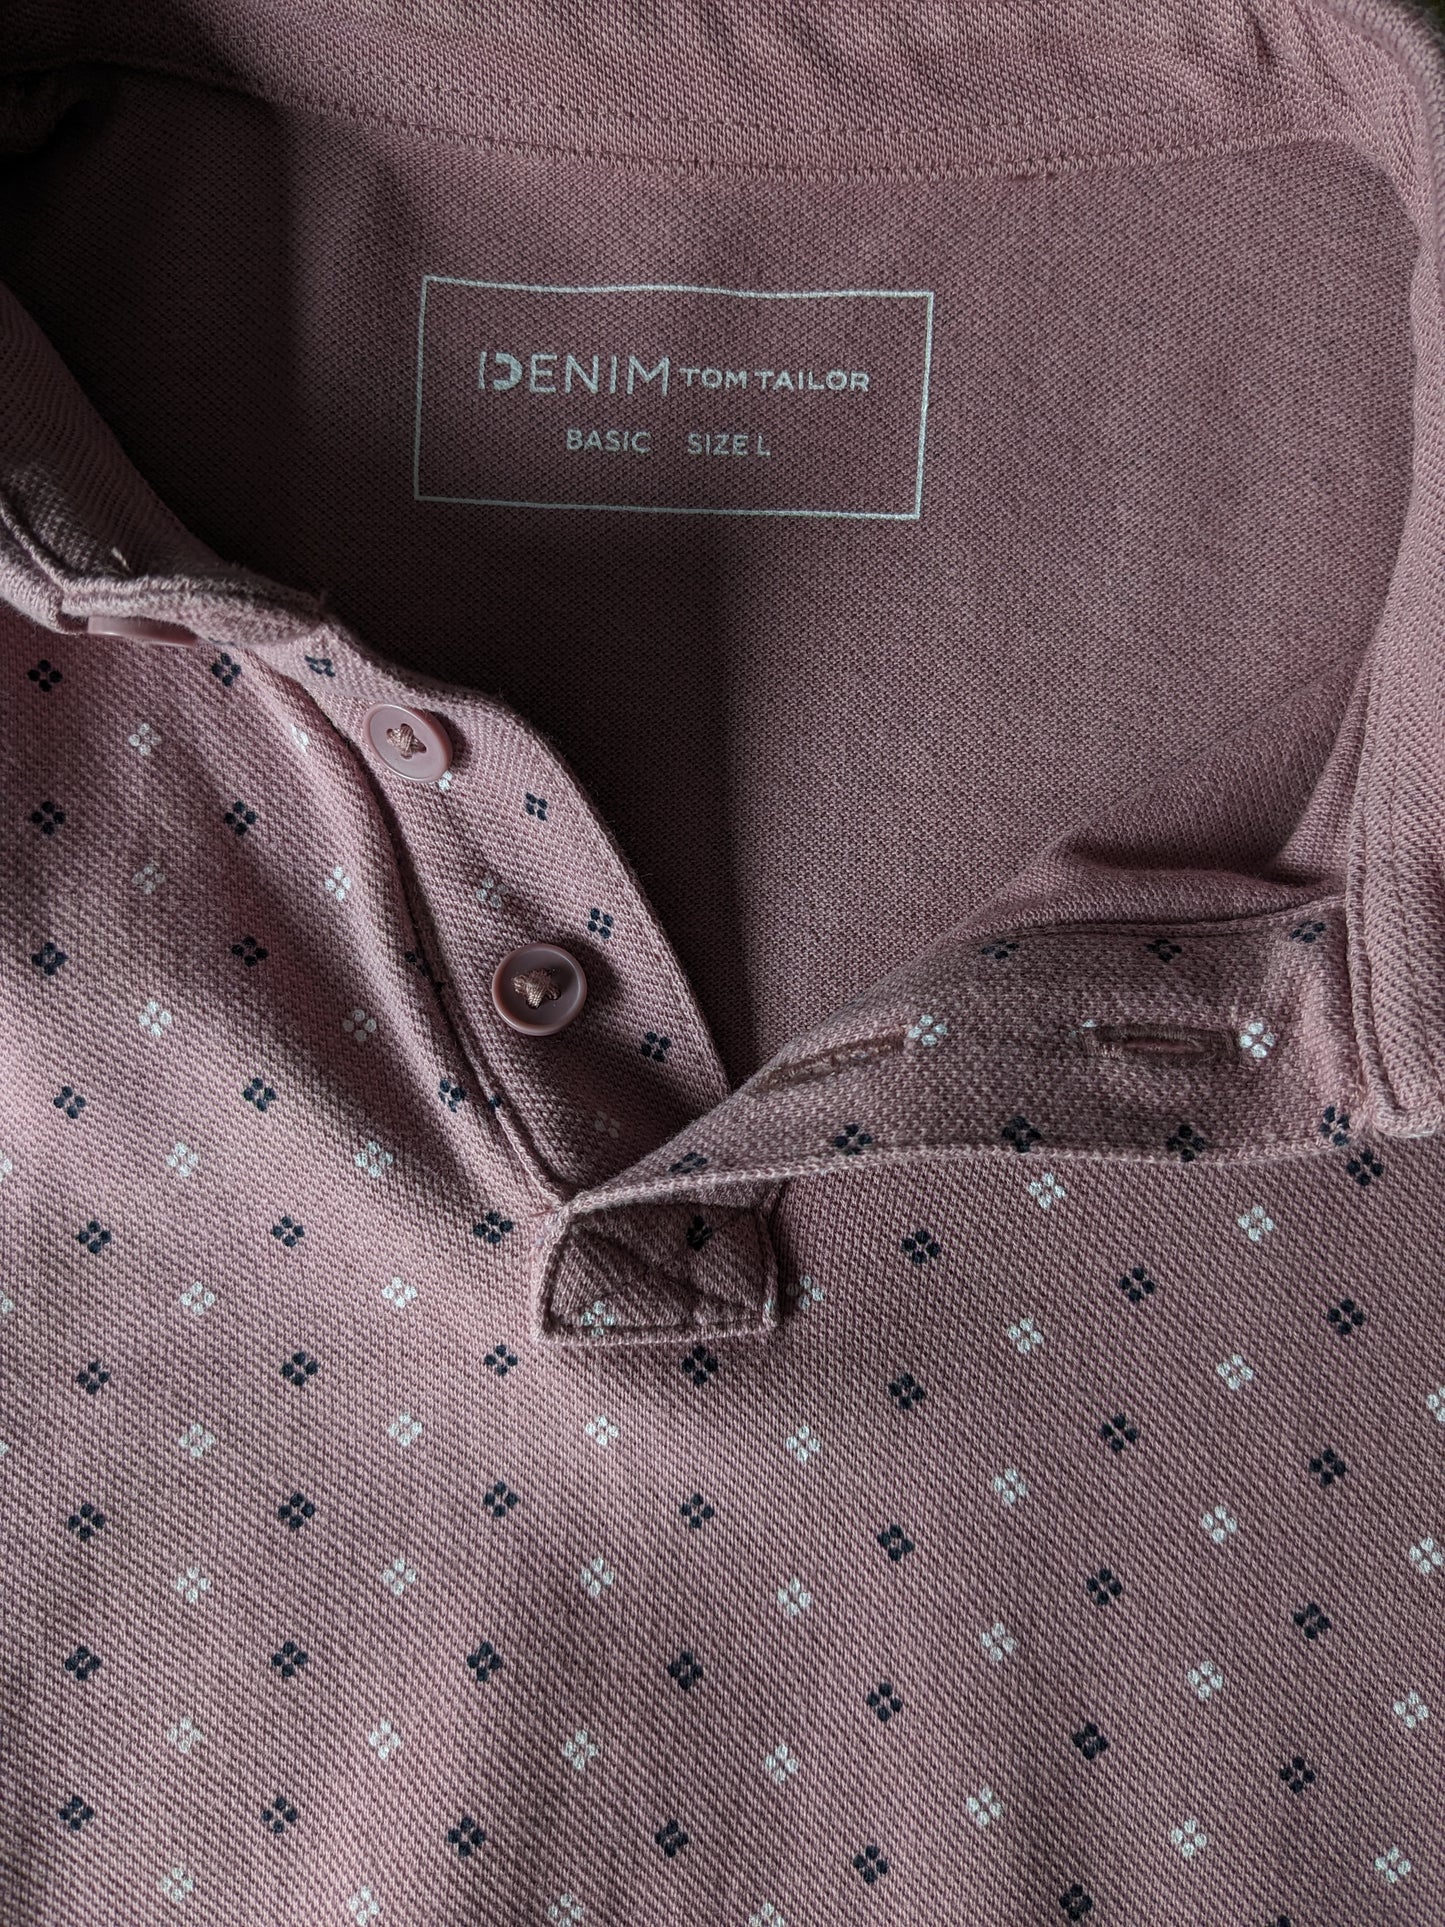 Tom Tailor Denim Polo. Pink white blue print. Size L.